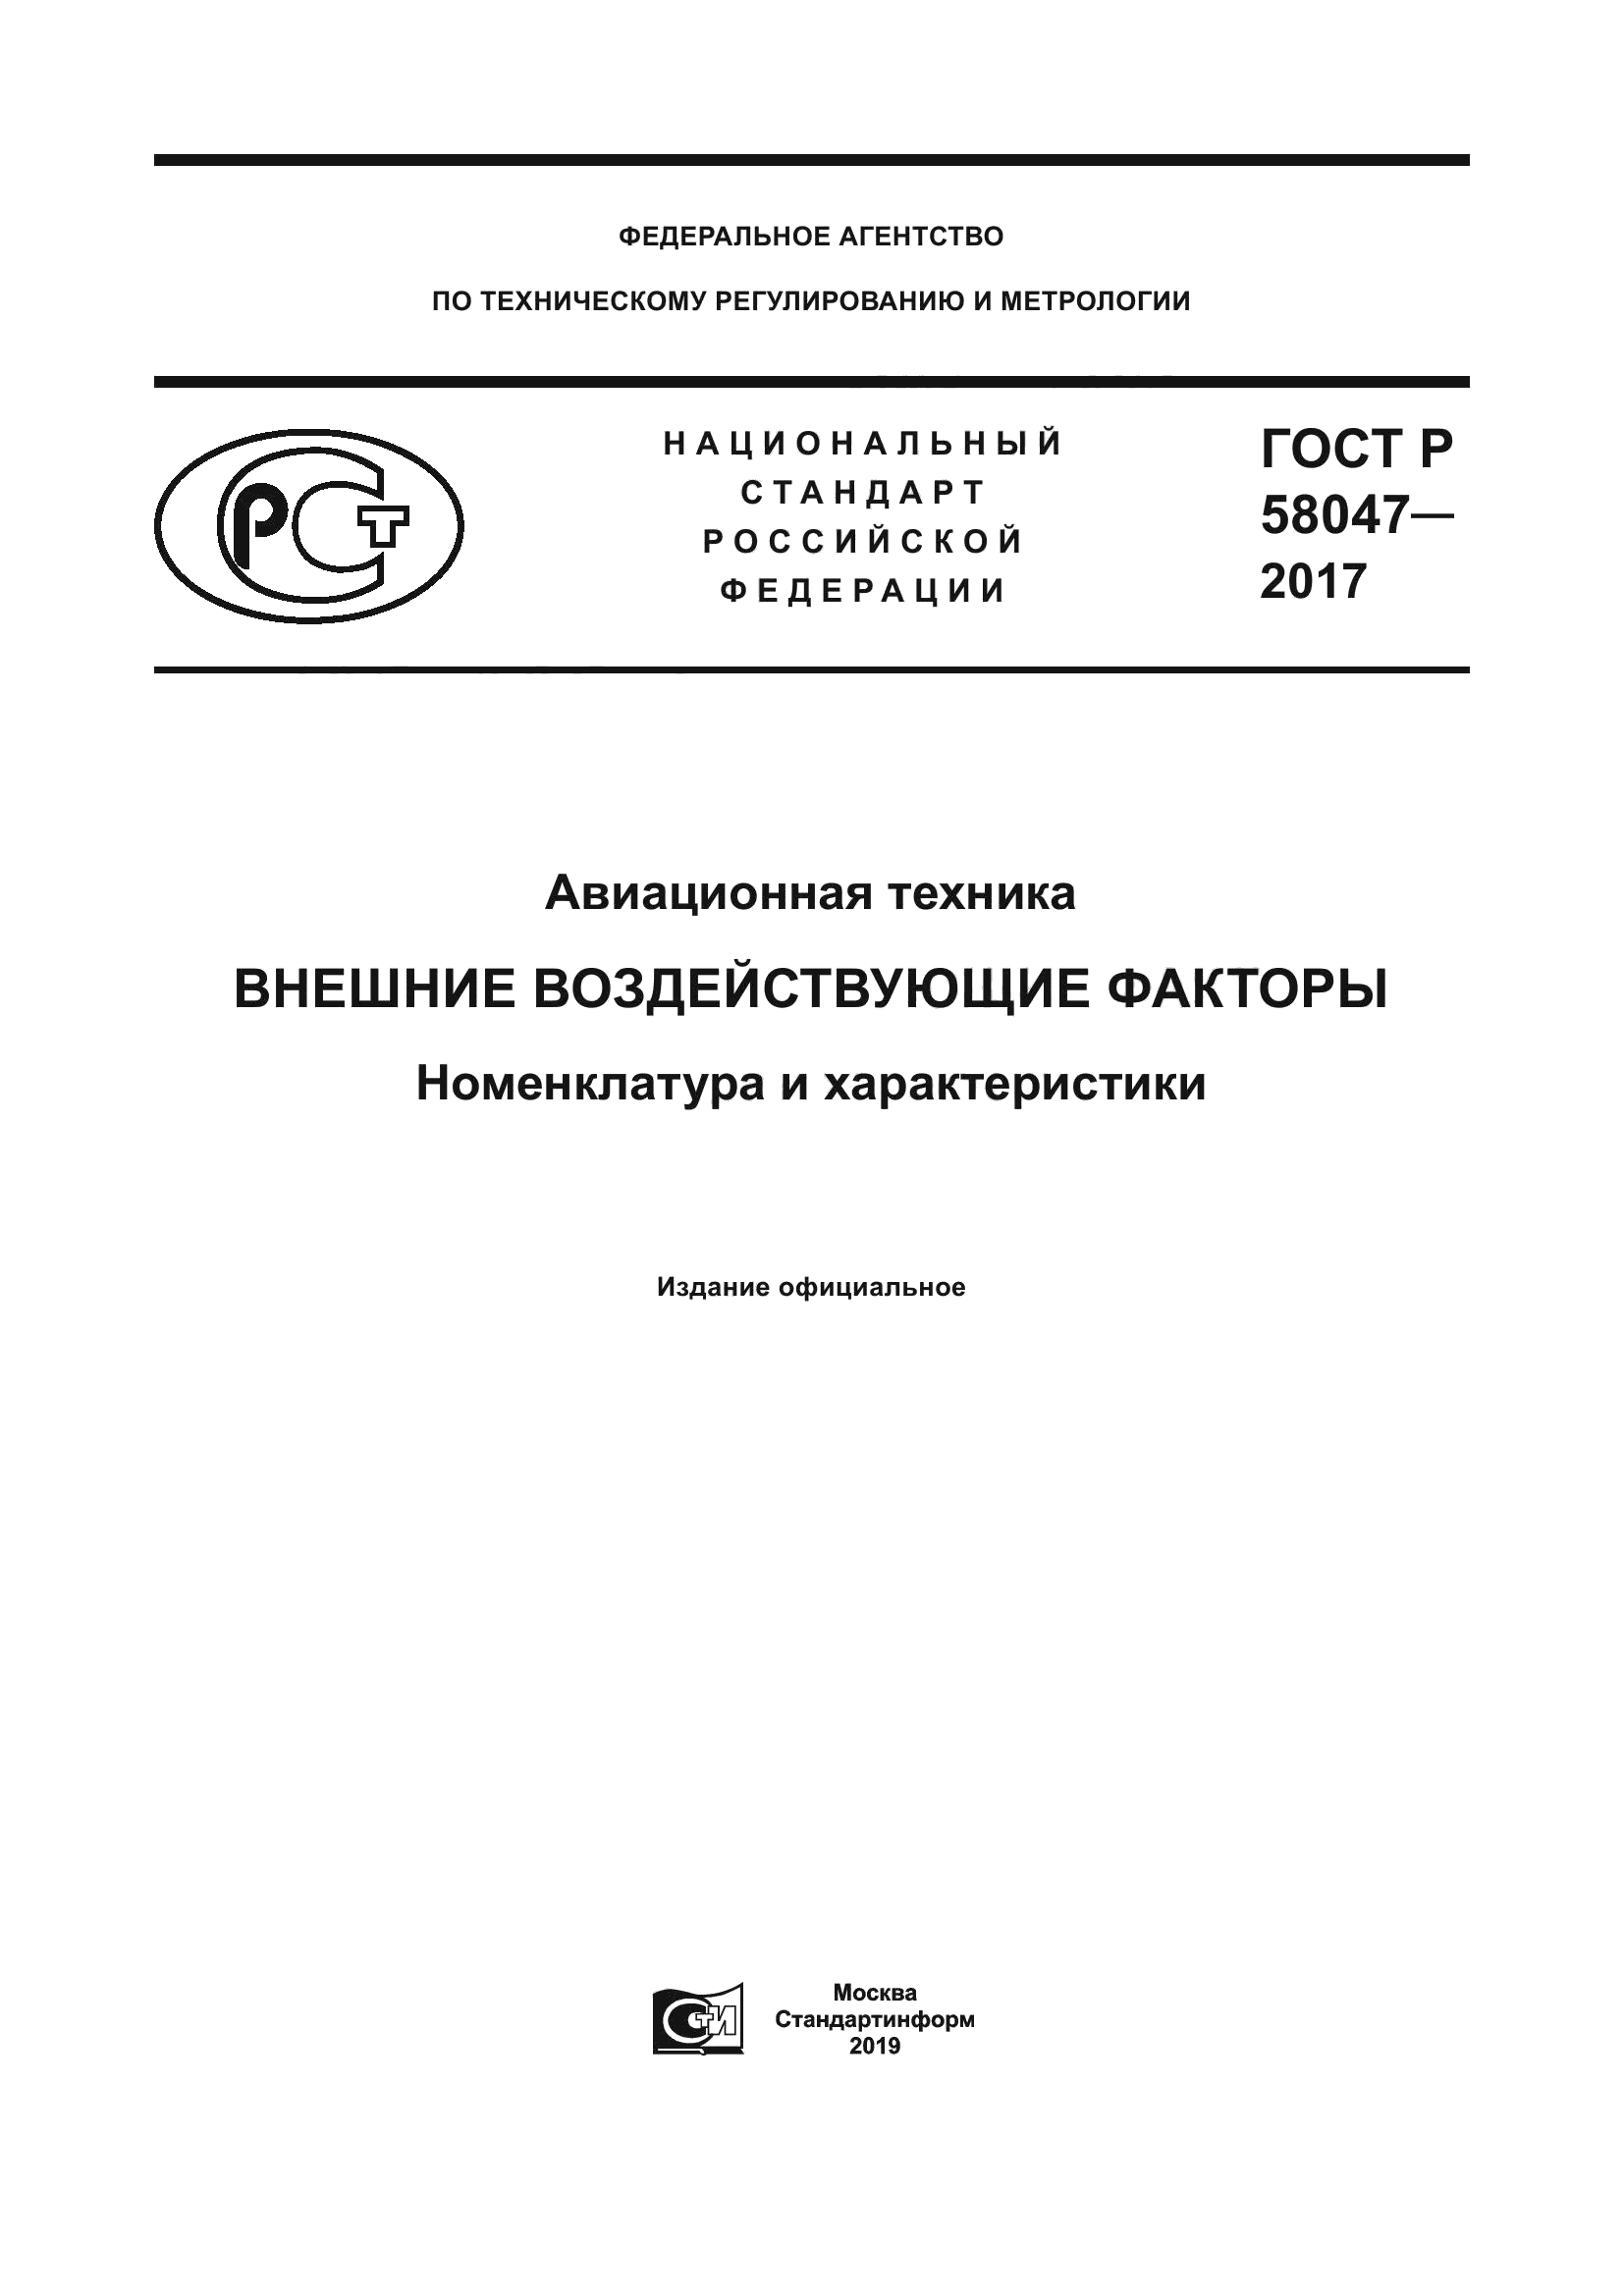 ГОСТ Р 58047-2017